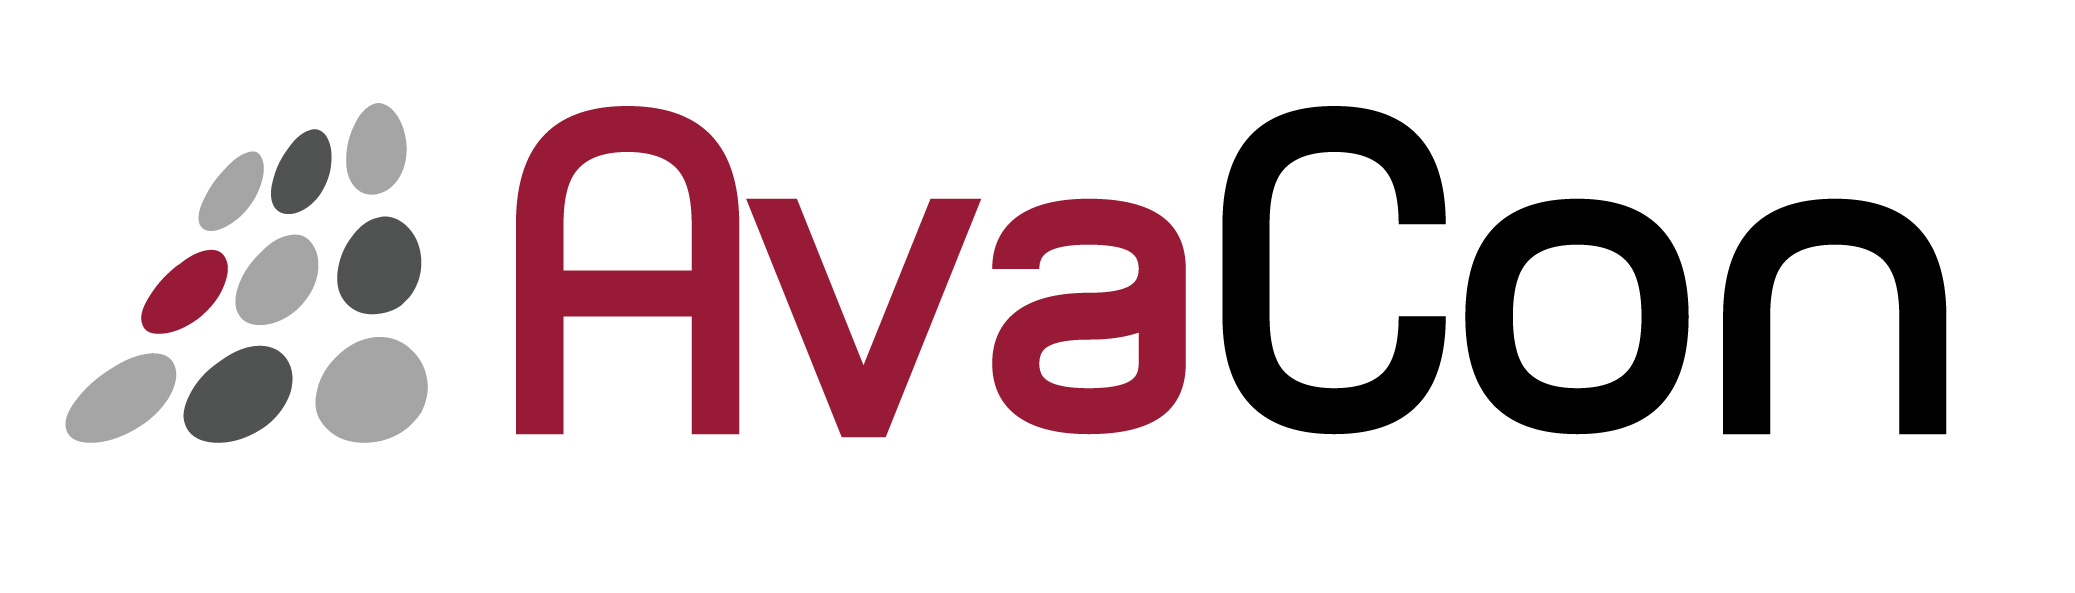 AvaCon_Primary_Logo.jpg